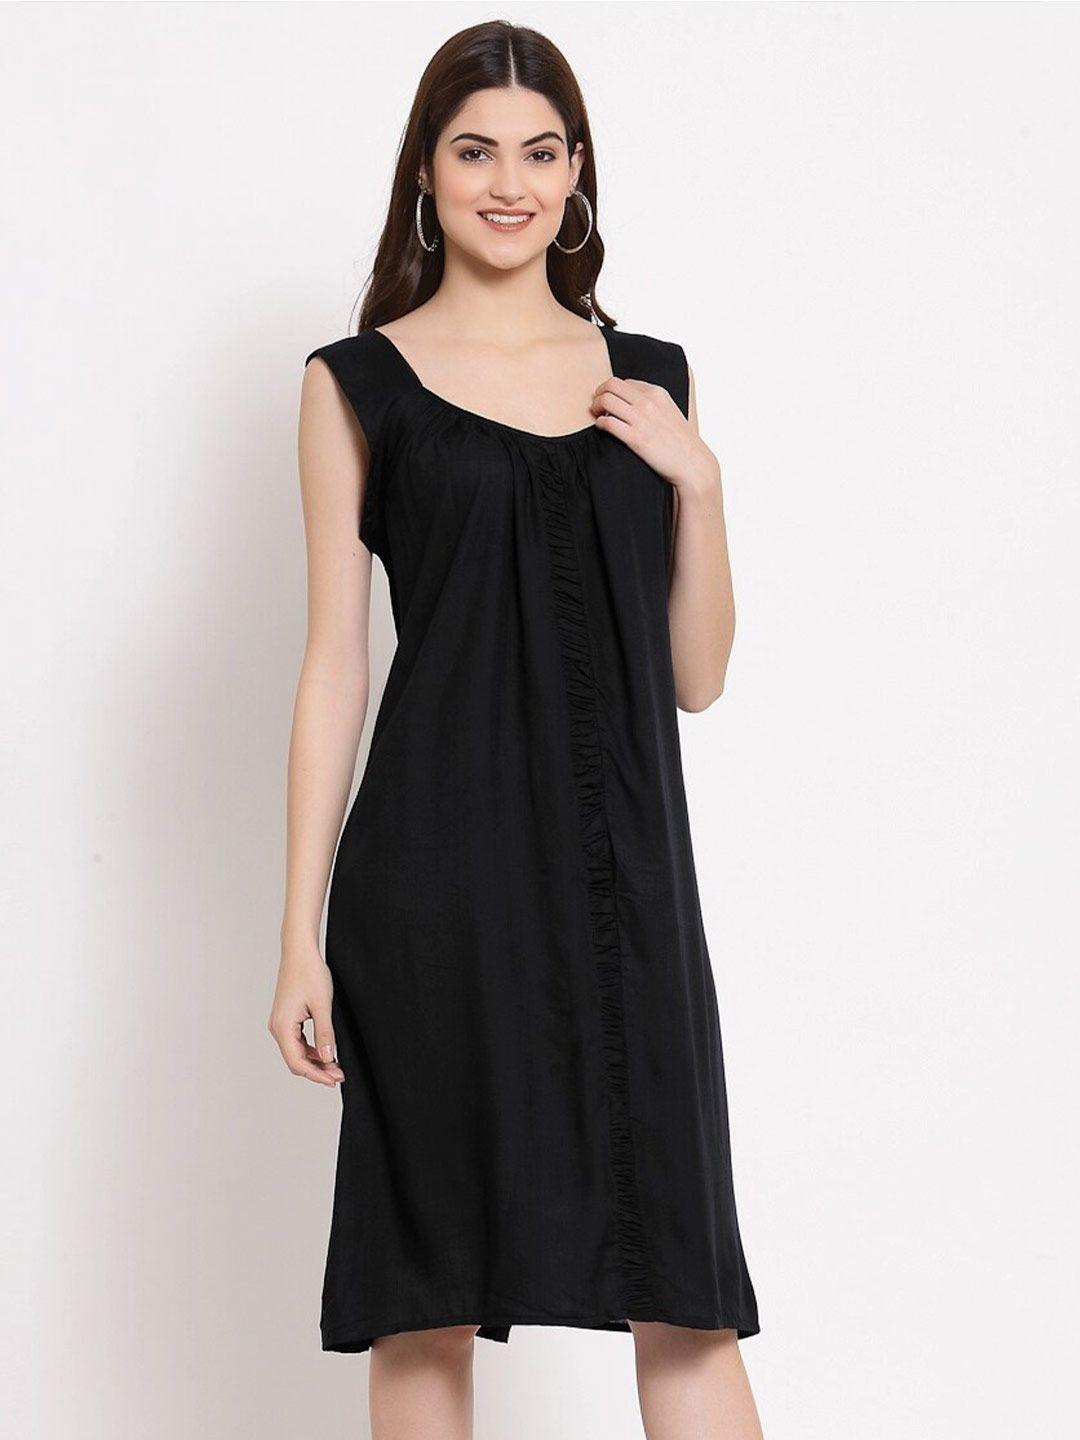 patrorna sleeveless a-line cotton dress